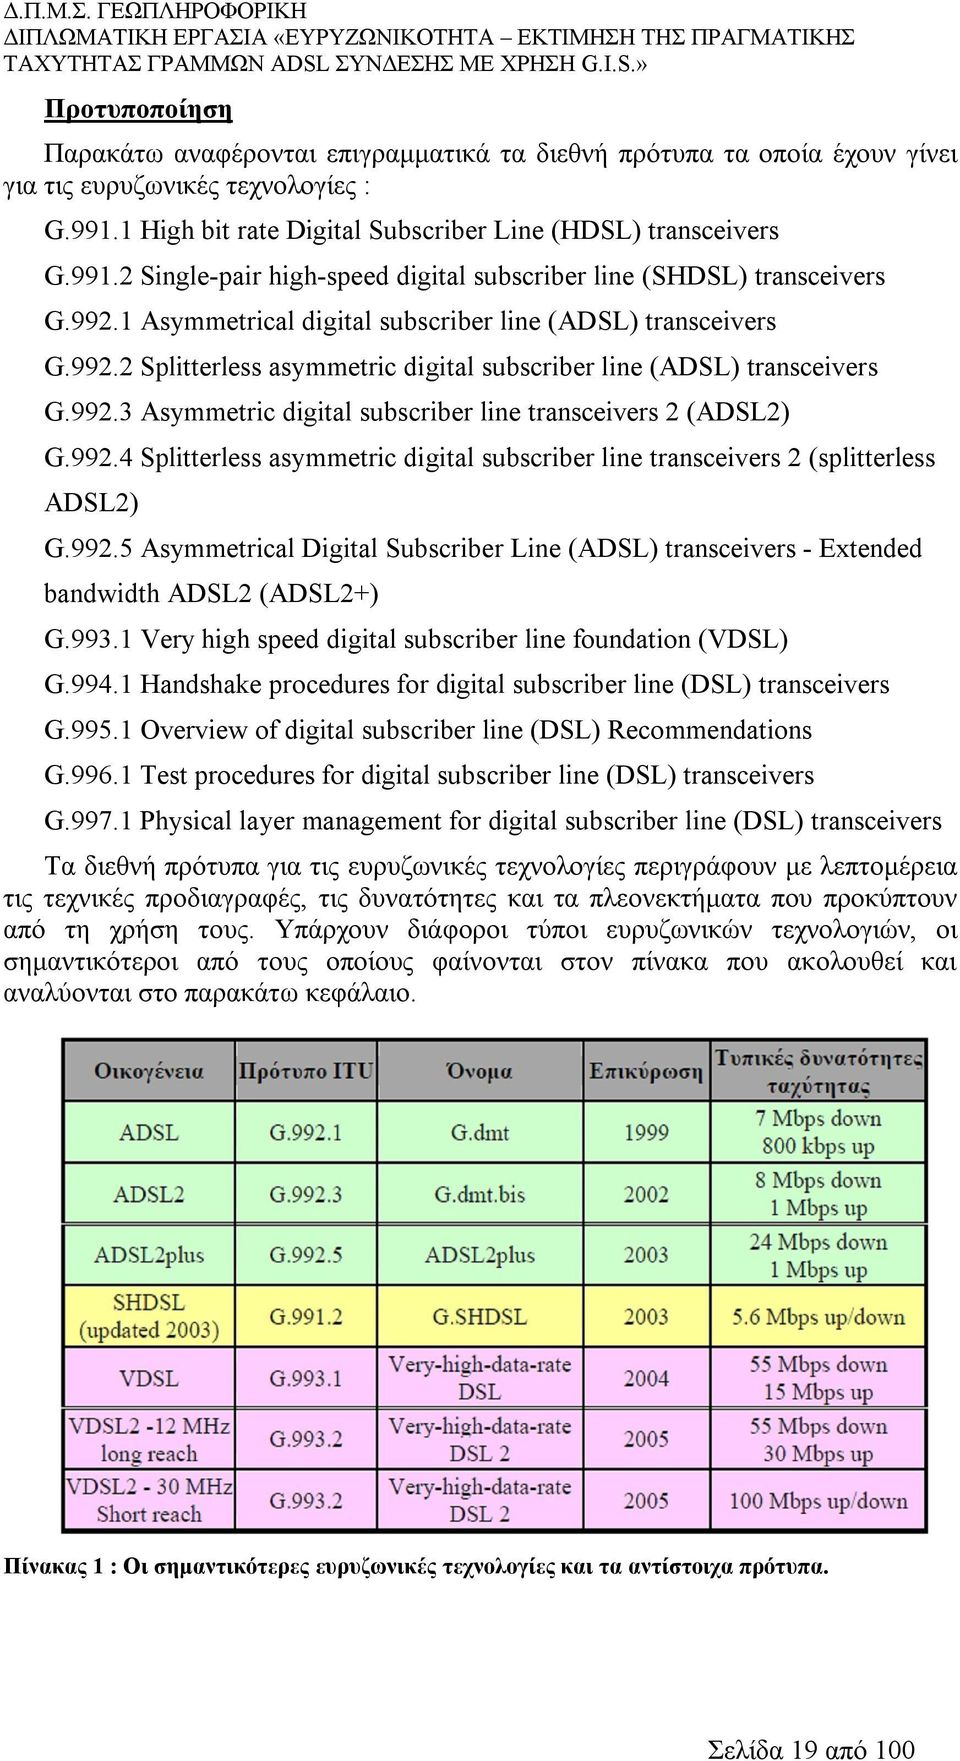 992.4 Splitterless asymmetric digital subscriber line transceivers 2 (splitterless ADSL2) G.992.5 Asymmetrical Digital Subscriber Line (ADSL) transceivers - Extended bandwidth ADSL2 (ADSL2+) G.993.